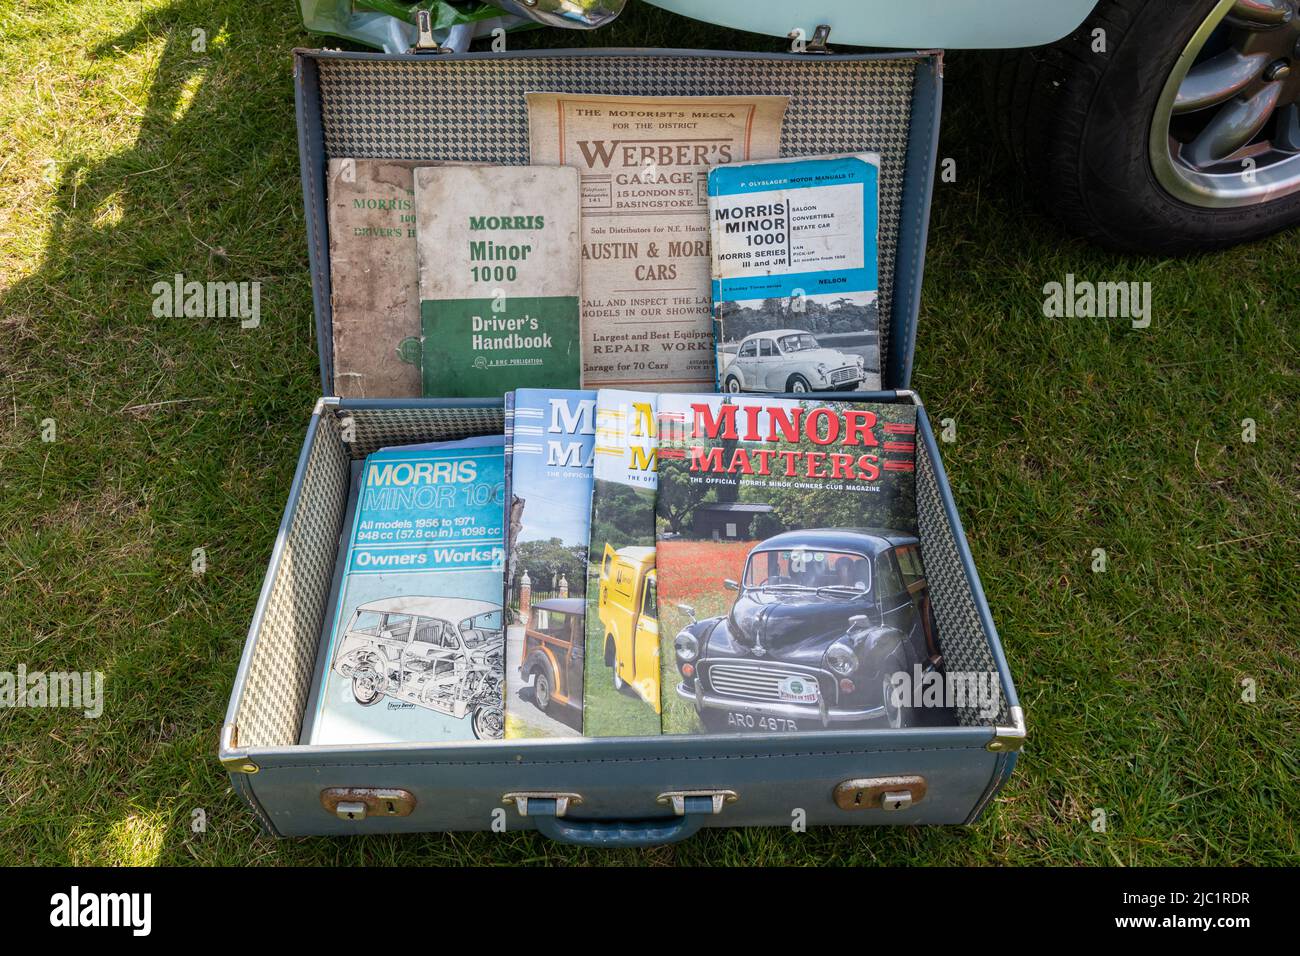 Morris minor classic car memorabilia, books and magazines, UK, at a vintage and classic car show Stock Photo